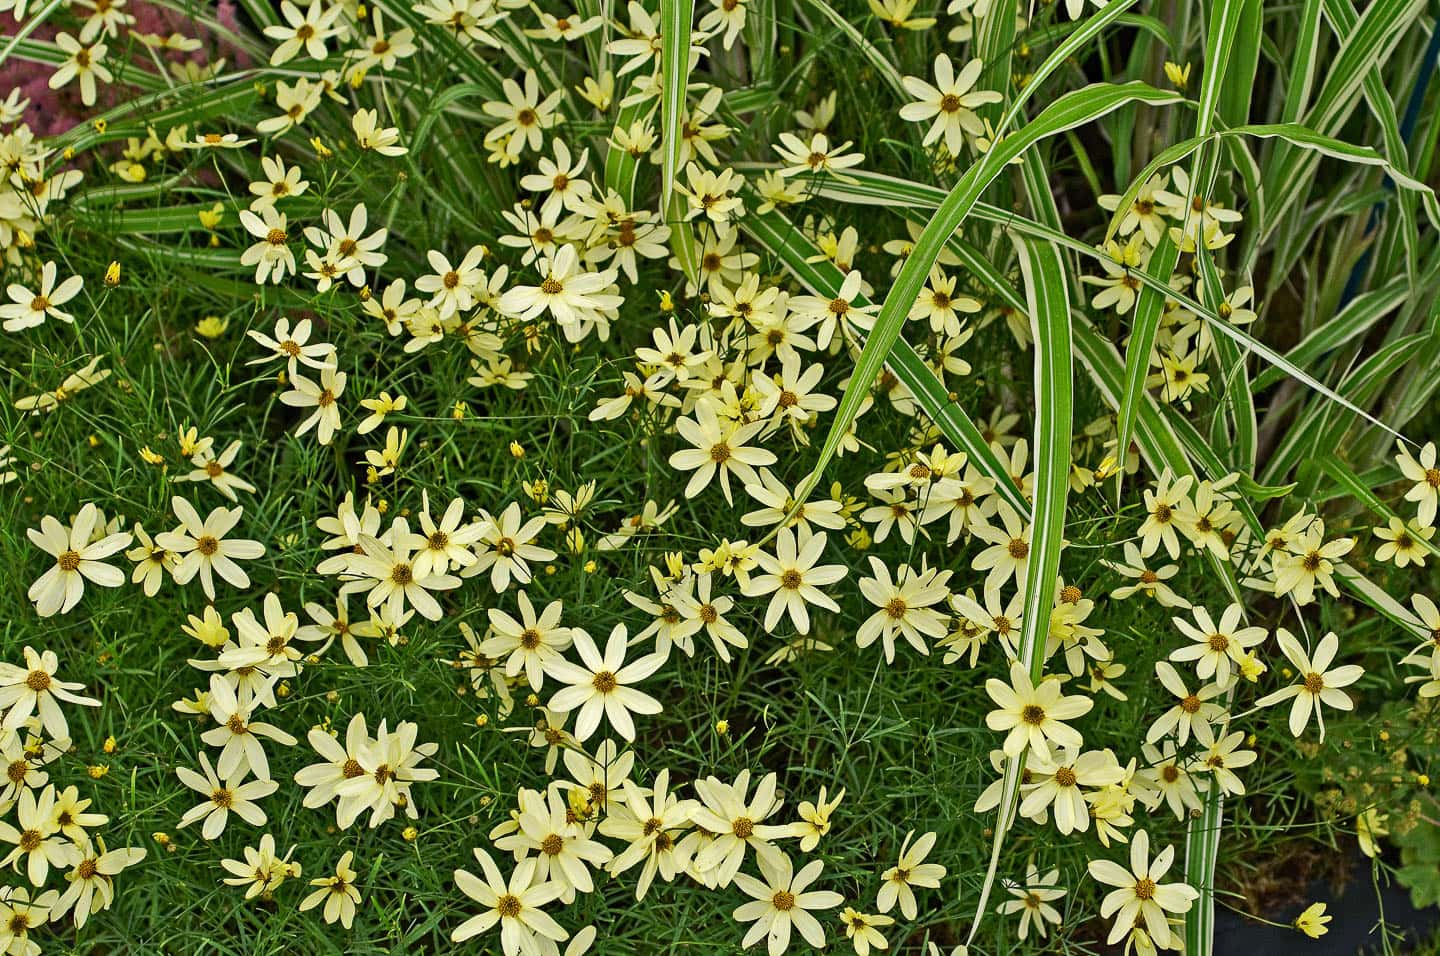 Yellow 'Moonbeam' Coreopsis flowers